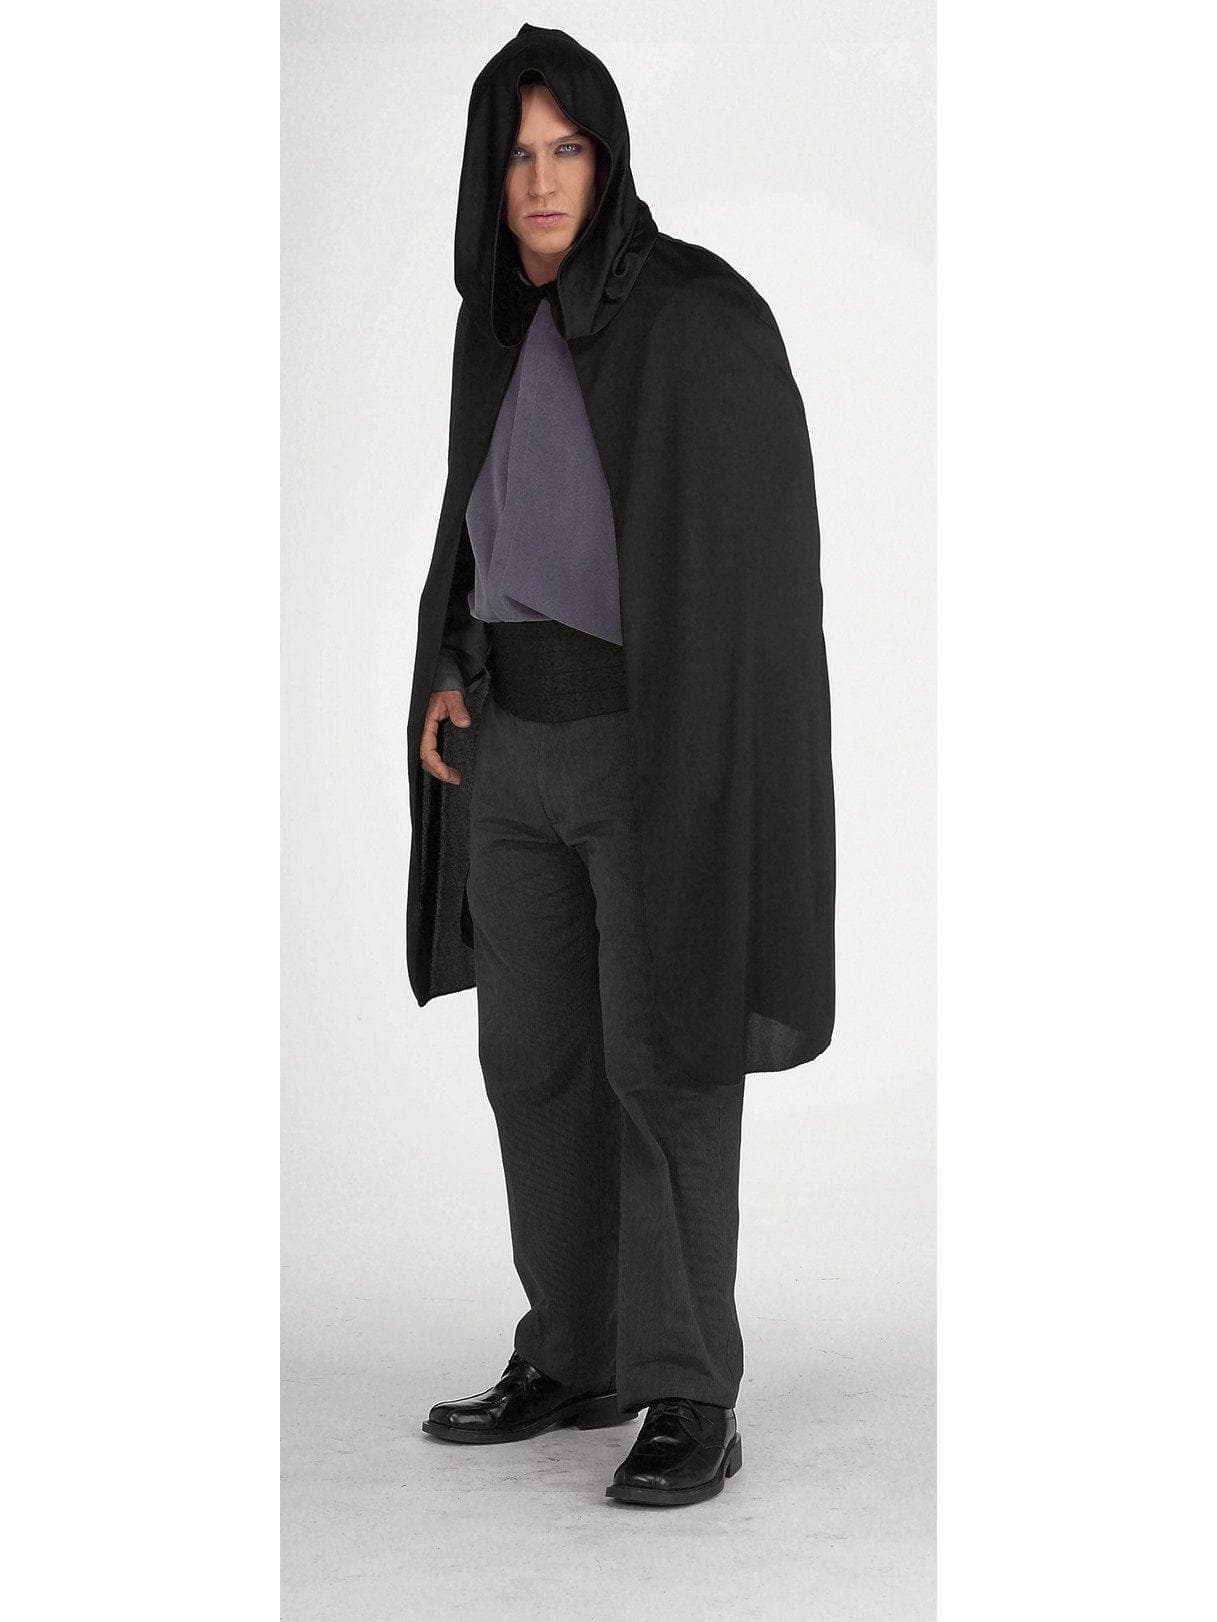 Adult Short Black Hooded Cape - costumes.com